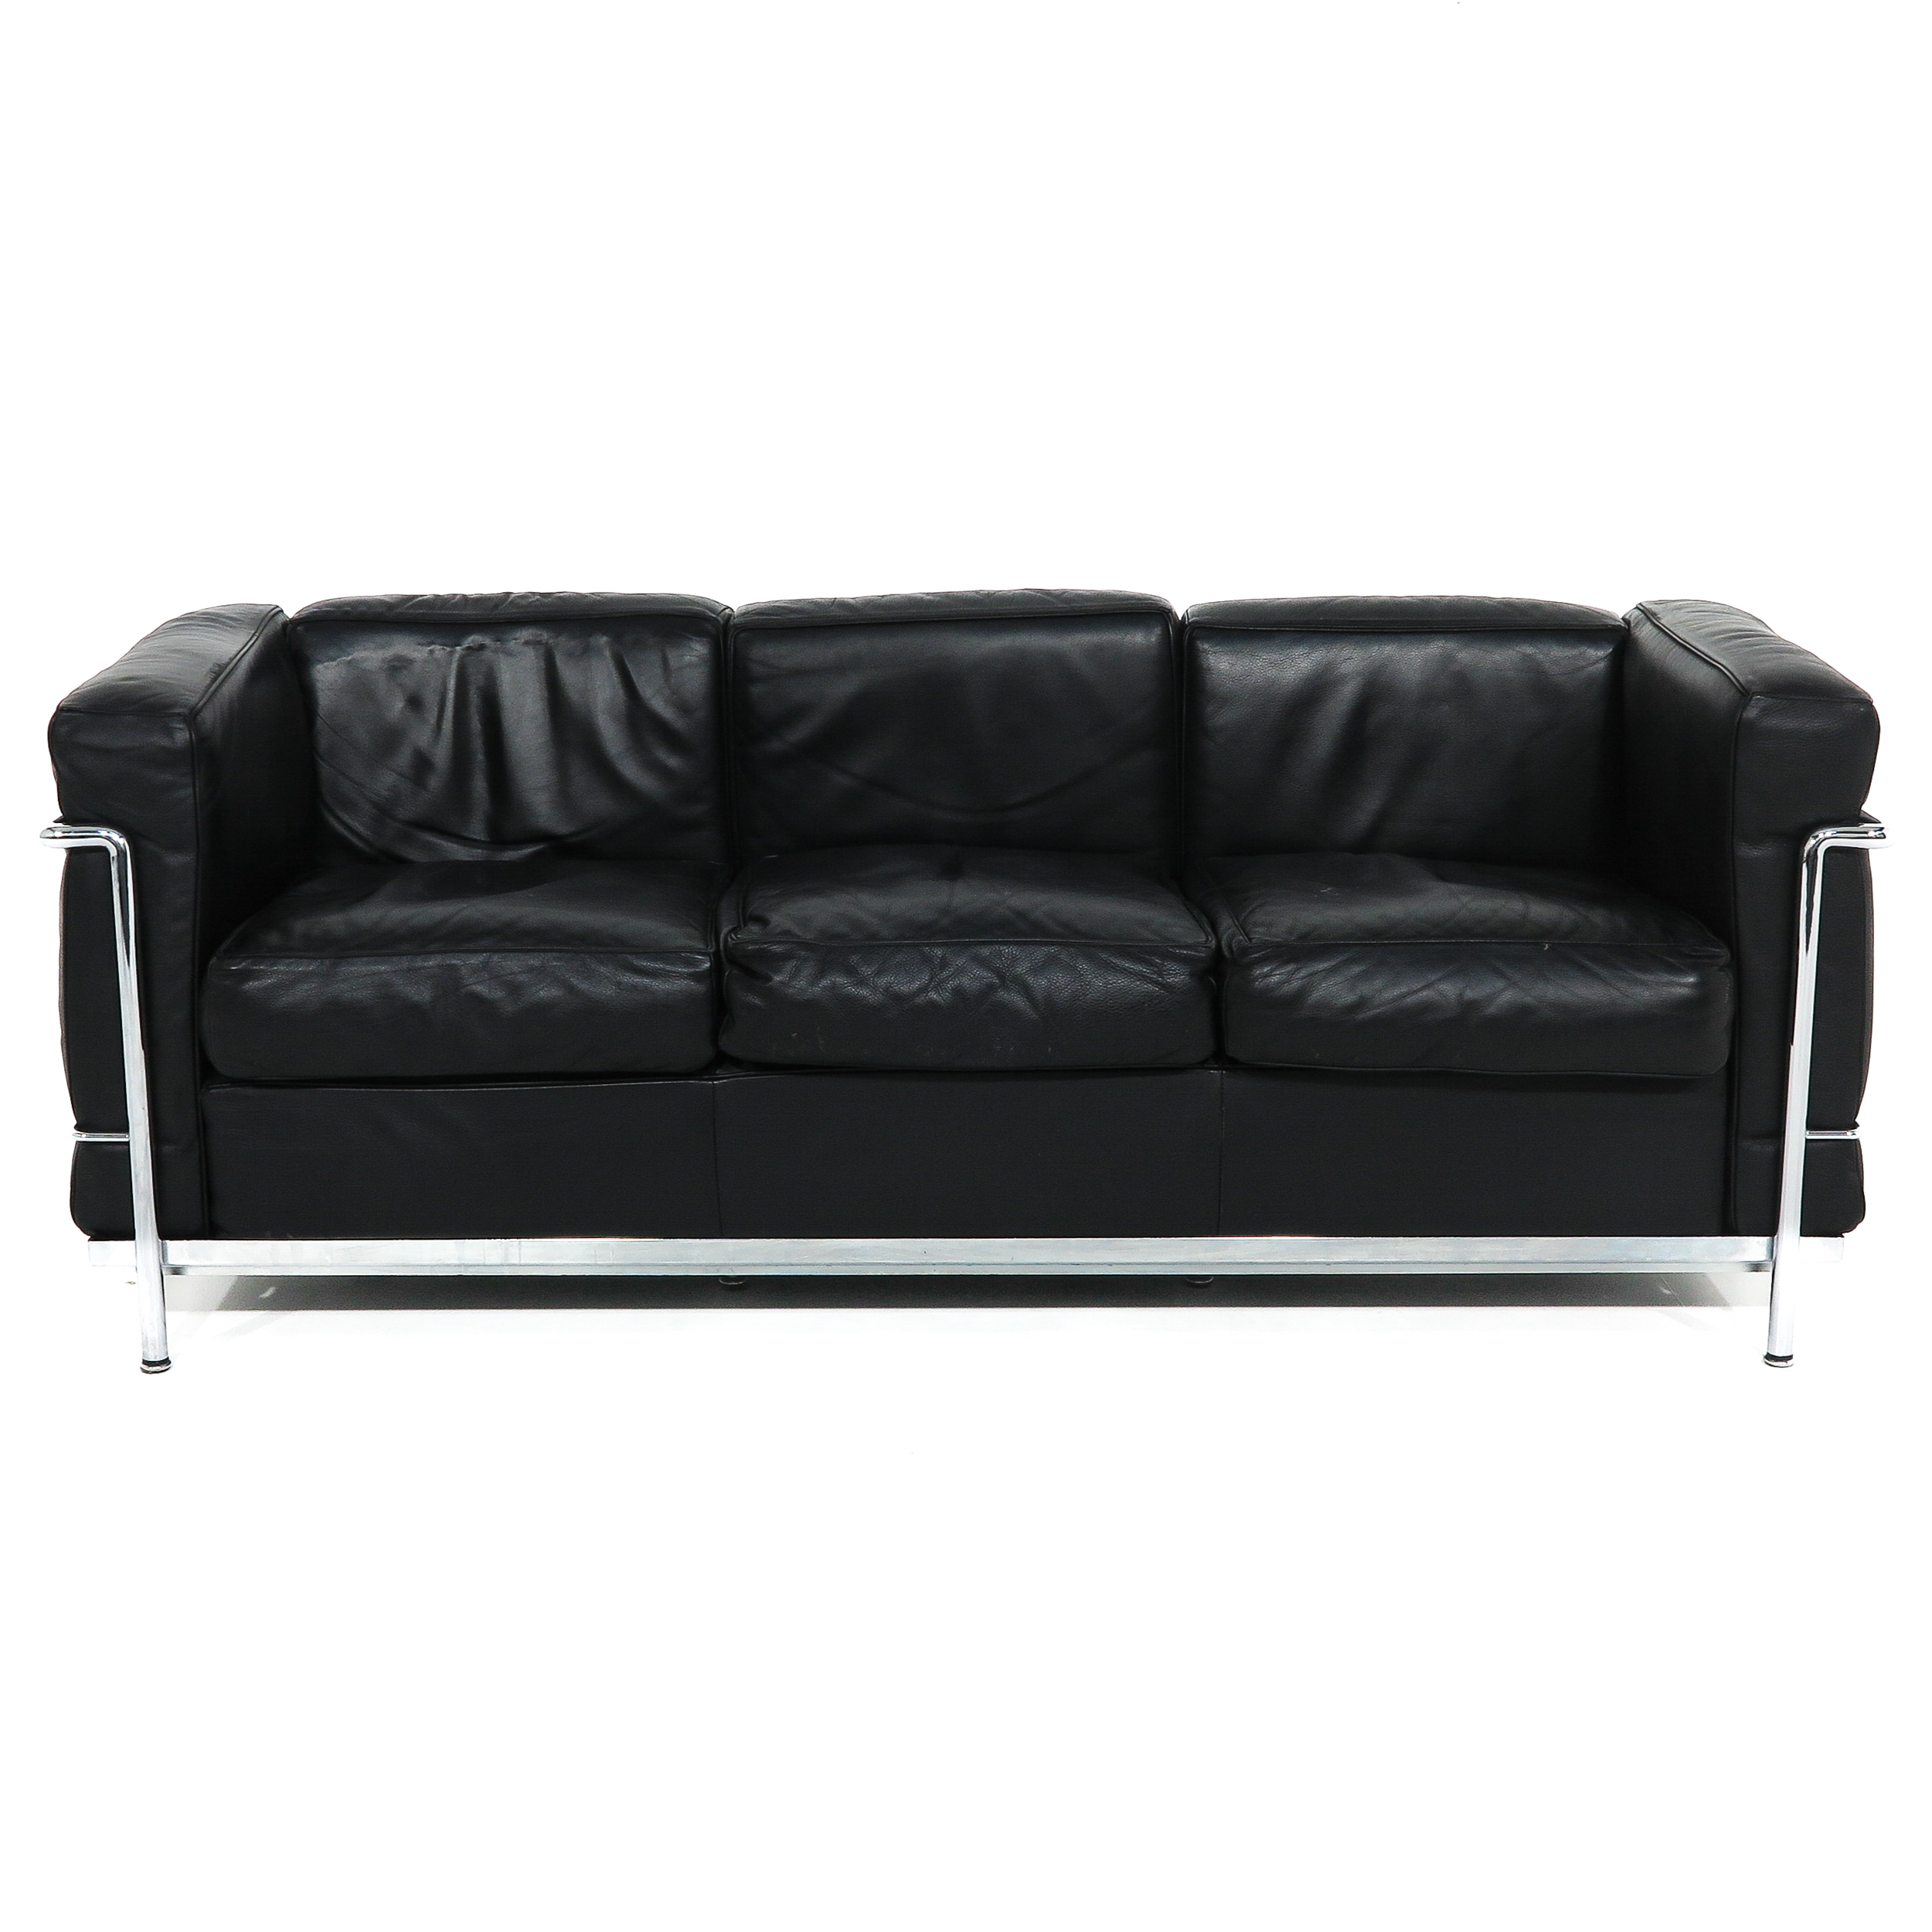 A Corbusier Design Sofa